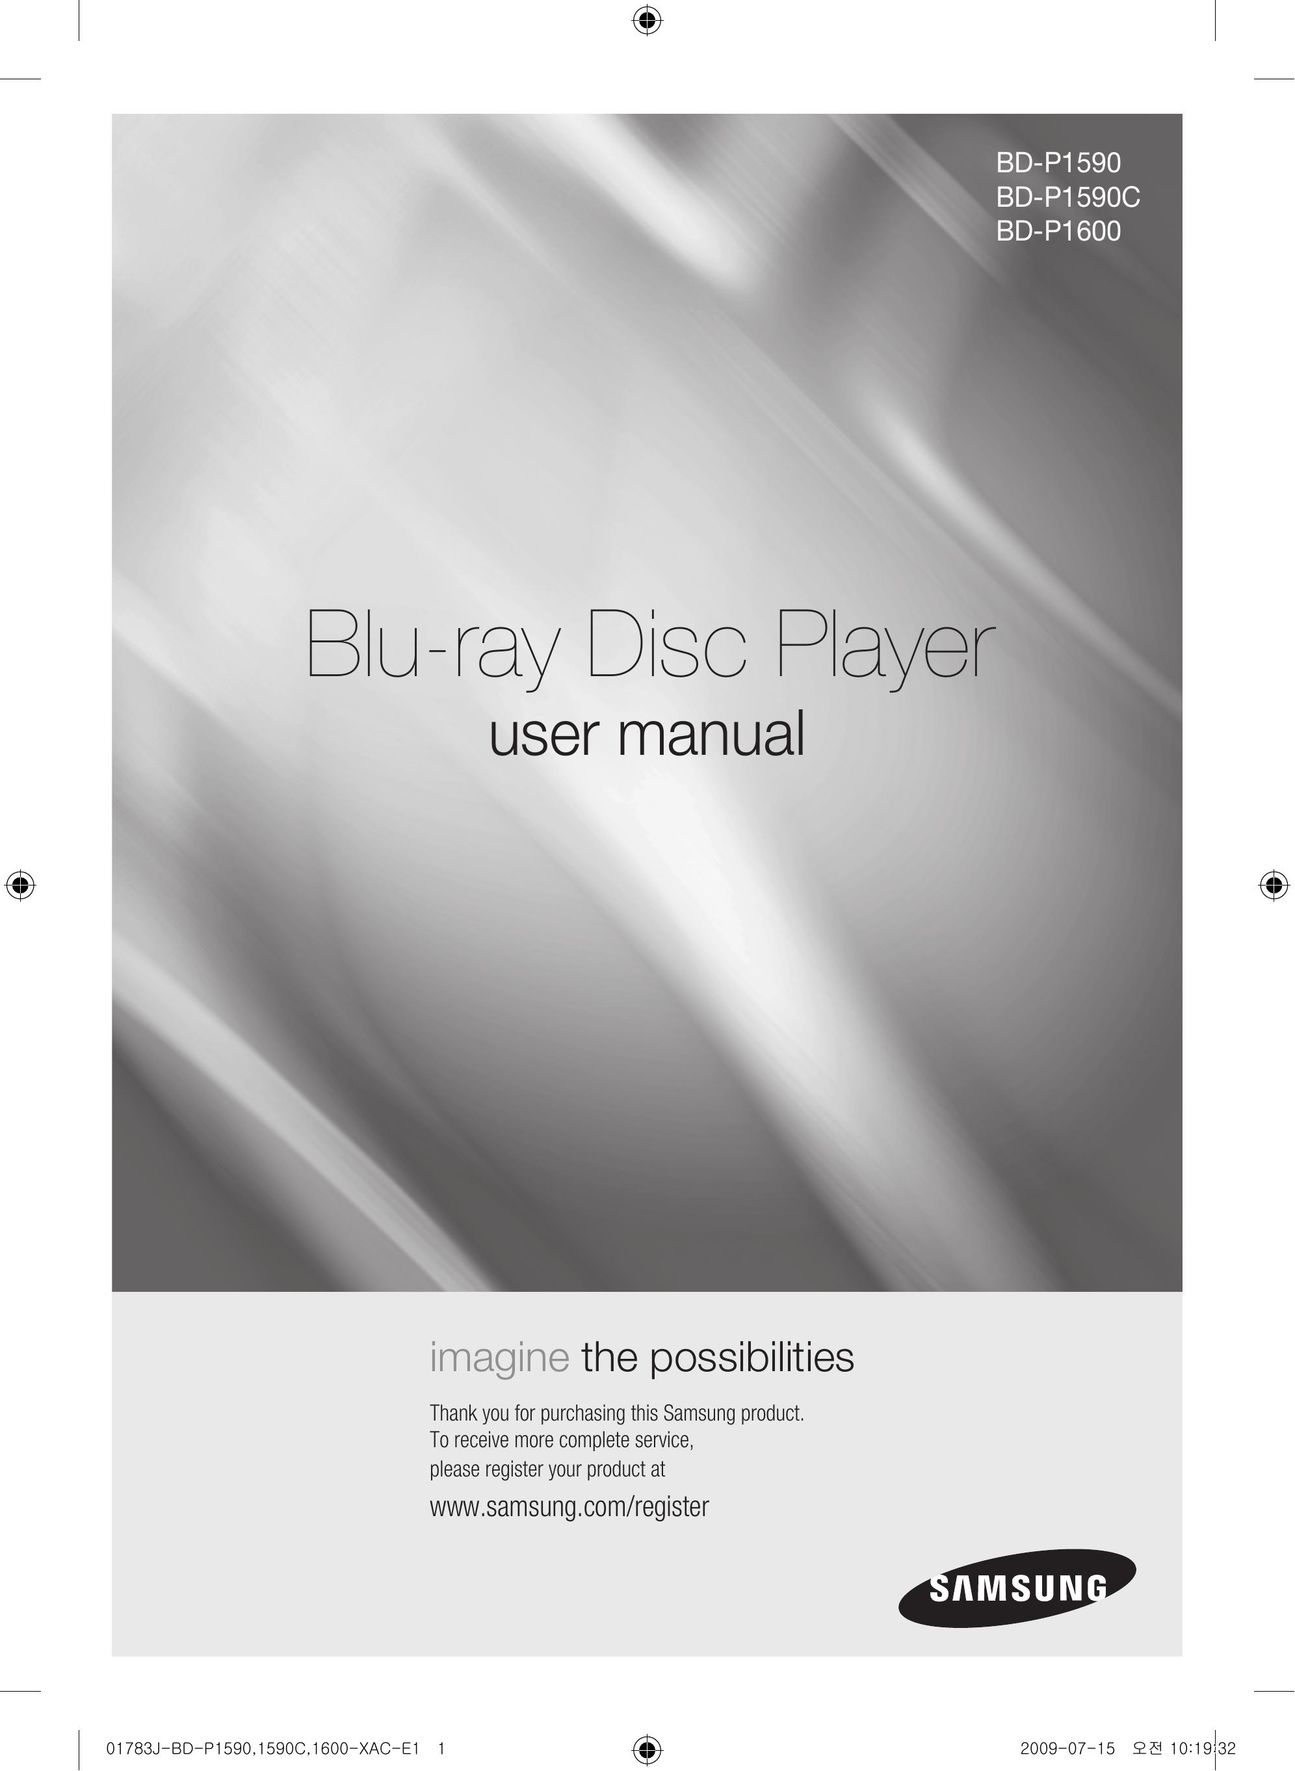 Samsung BD-P1590 DVD Player User Manual